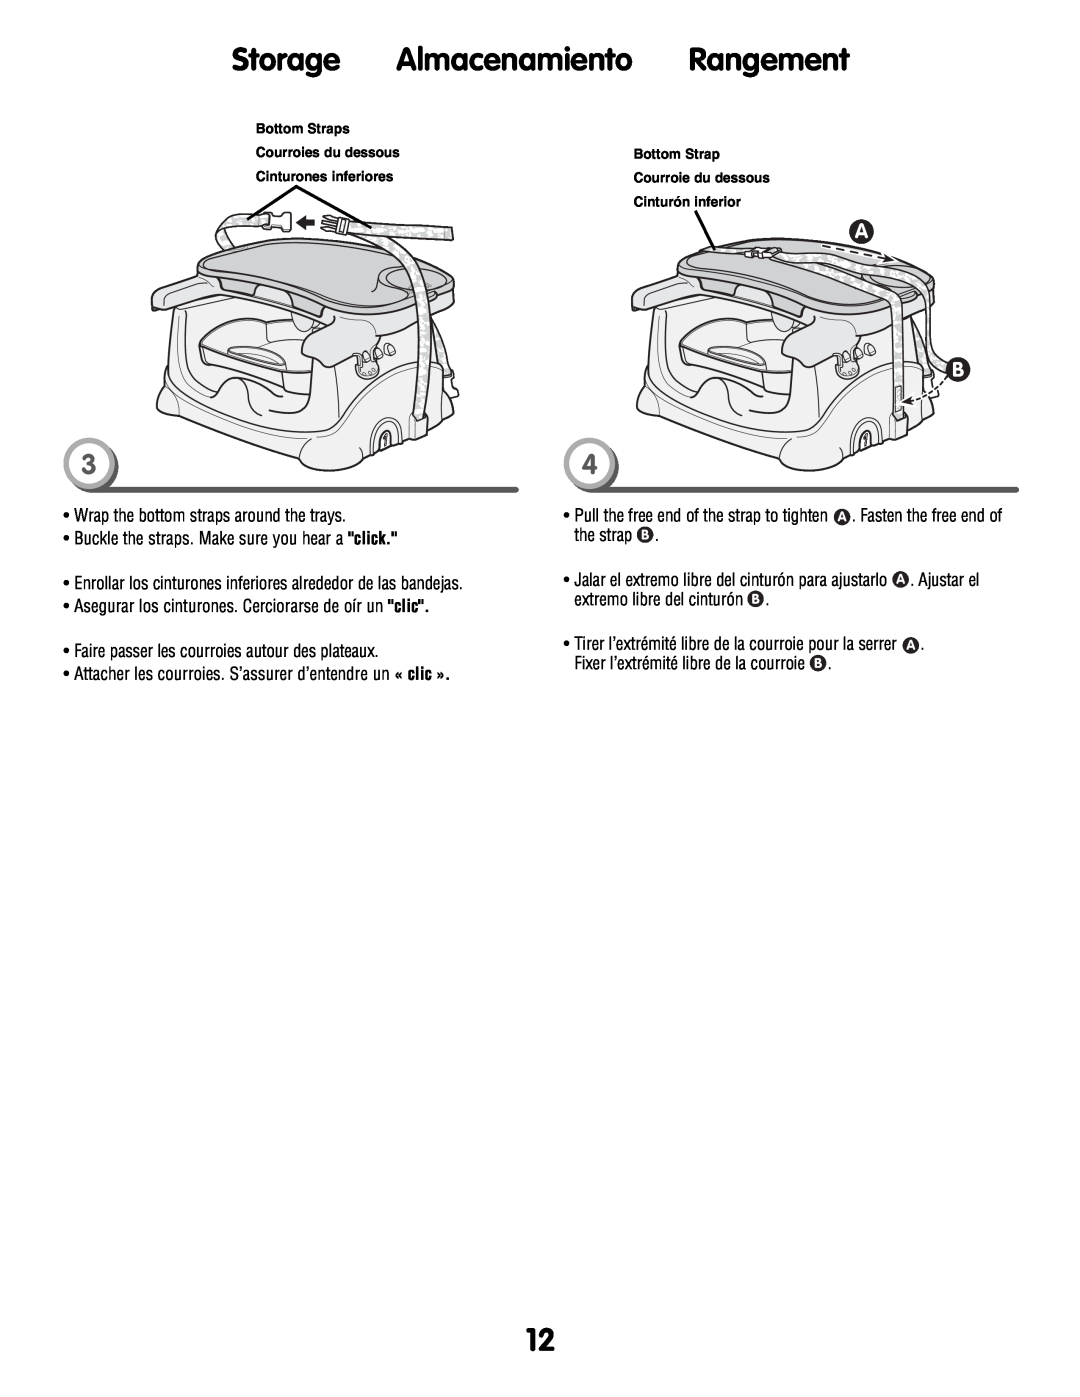 Fisher-Price P0278 instruction sheet Storage Almacenamiento Rangement, Wrap the bottom straps around the trays 